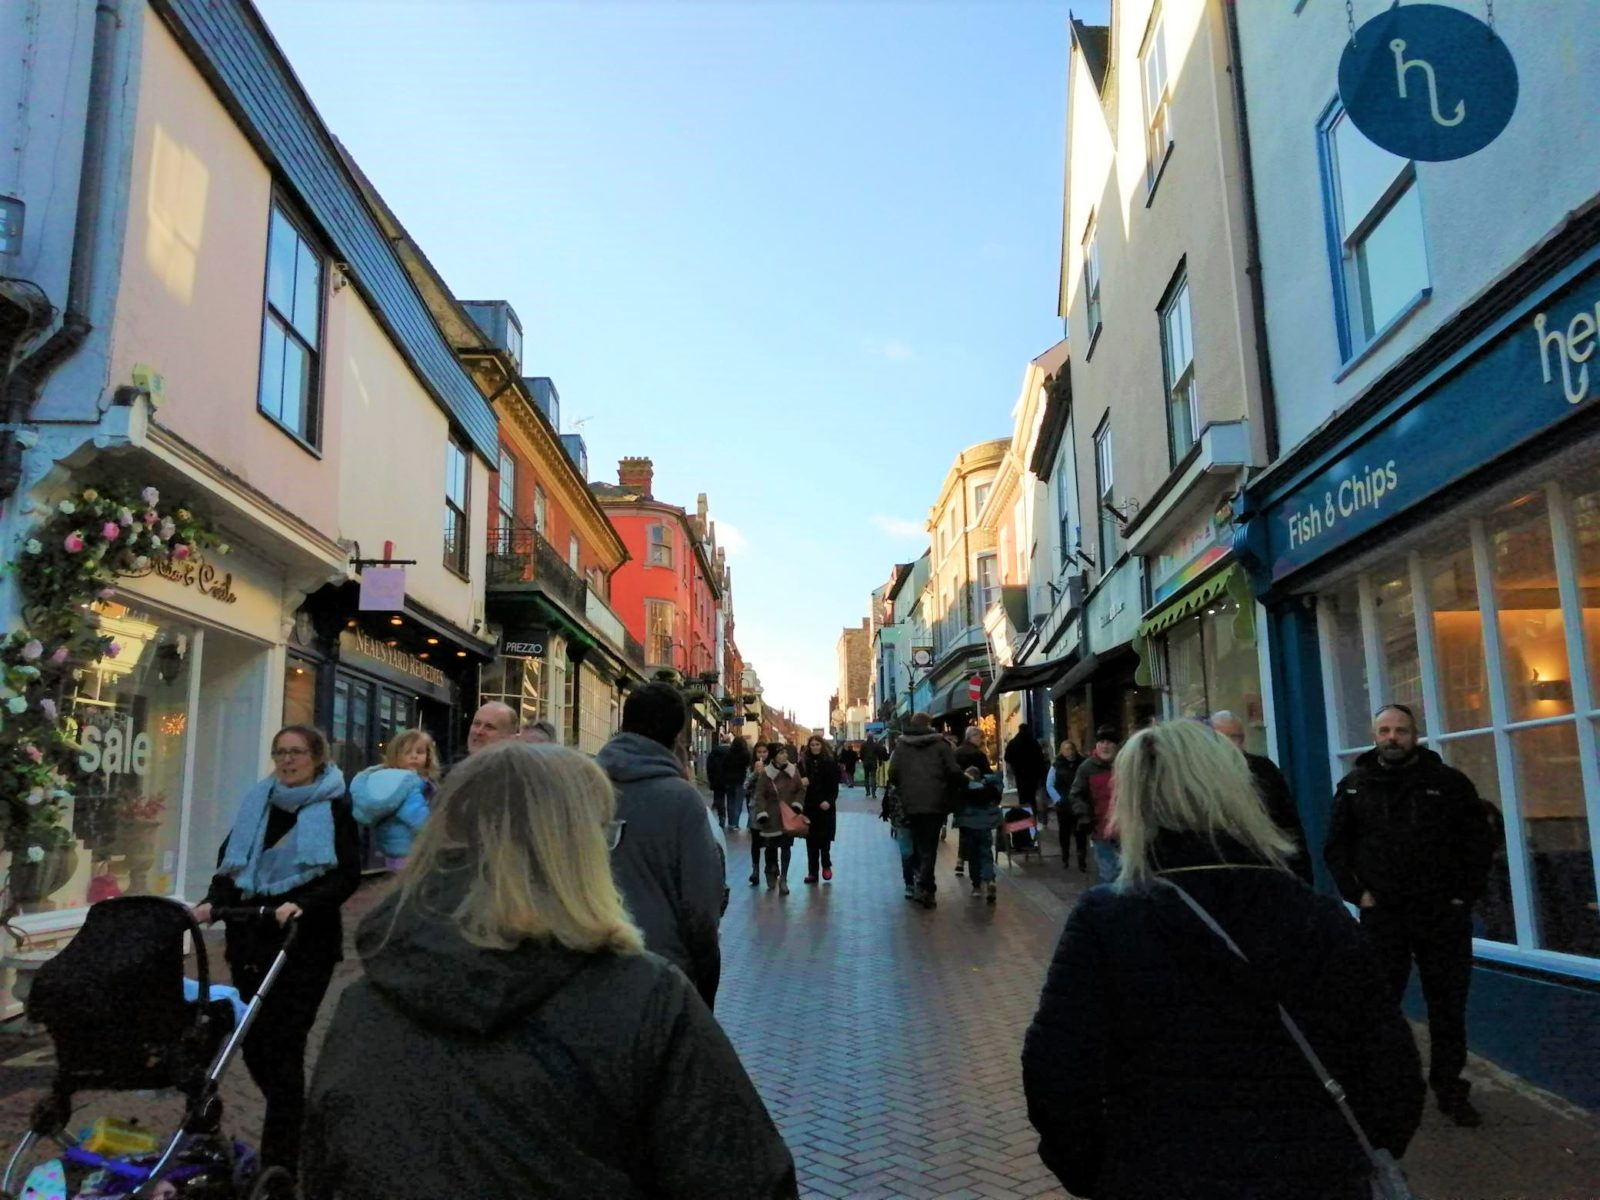 Busy Shopping street Bury St Edmunds